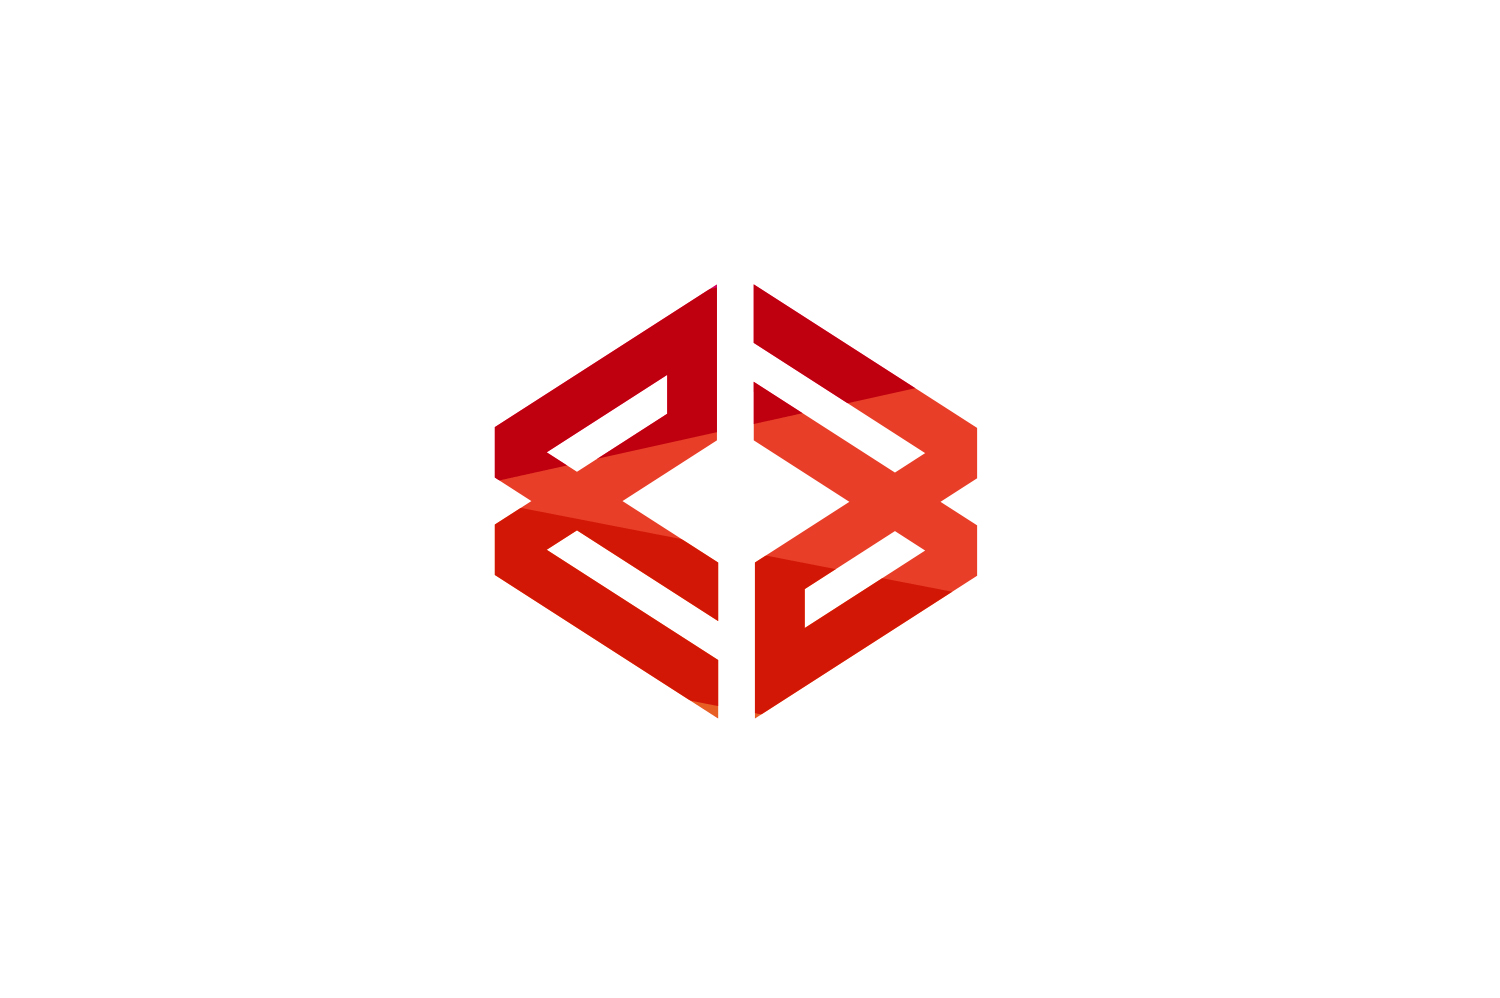 Rebase database software developer Logo Designed by Freelance Logo Designer, The Logo Smith.